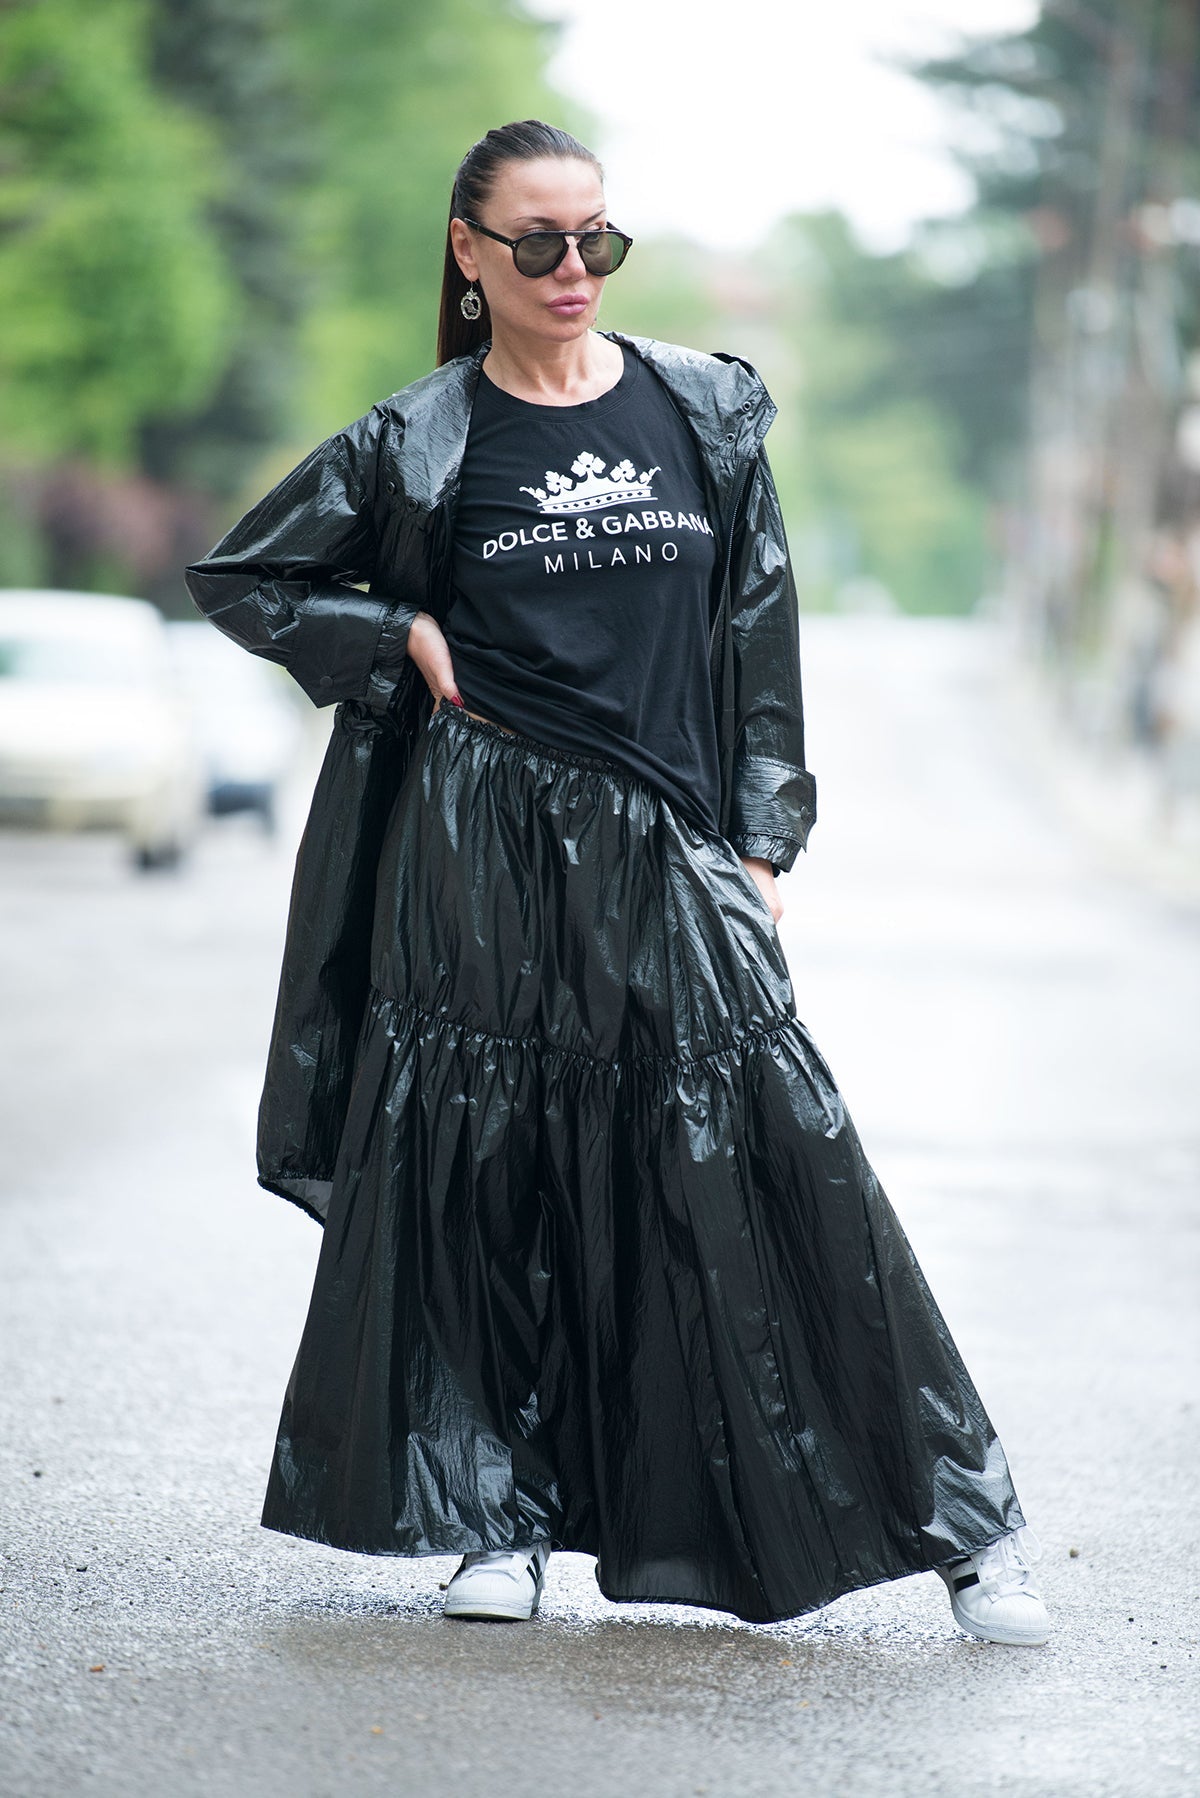 Black Stylish Skirt EUGF - EUG FASHION EugFashion 